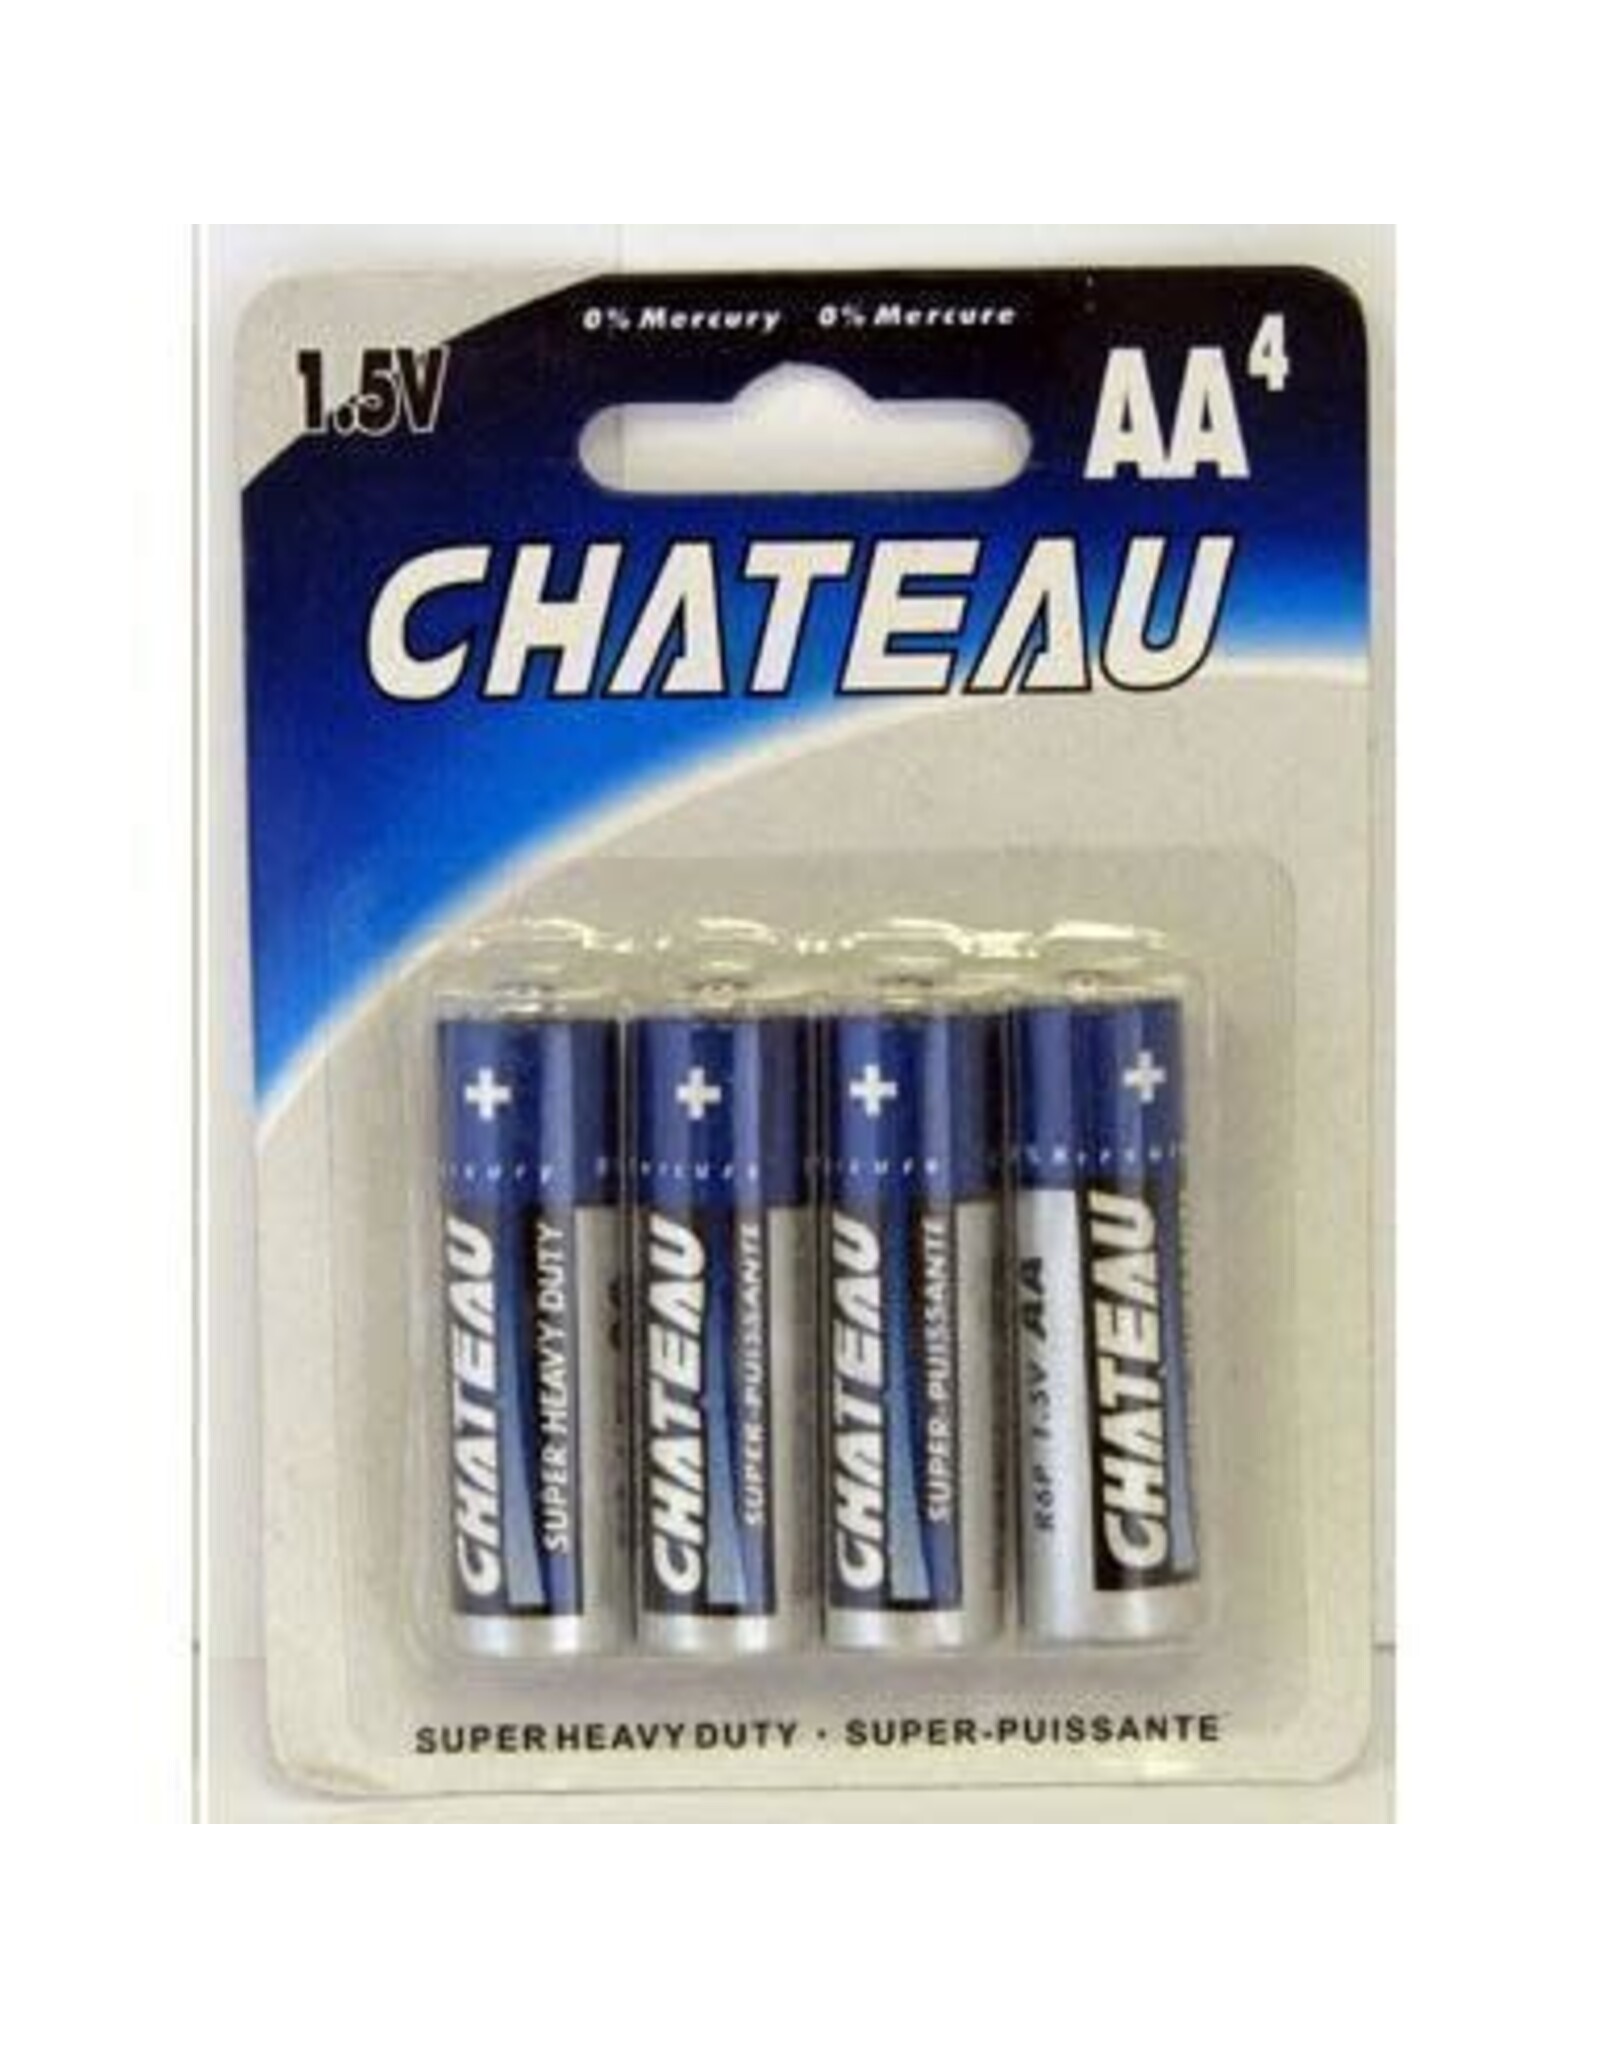 Chateau Super Heavy Duty AA Batteries 4 pack